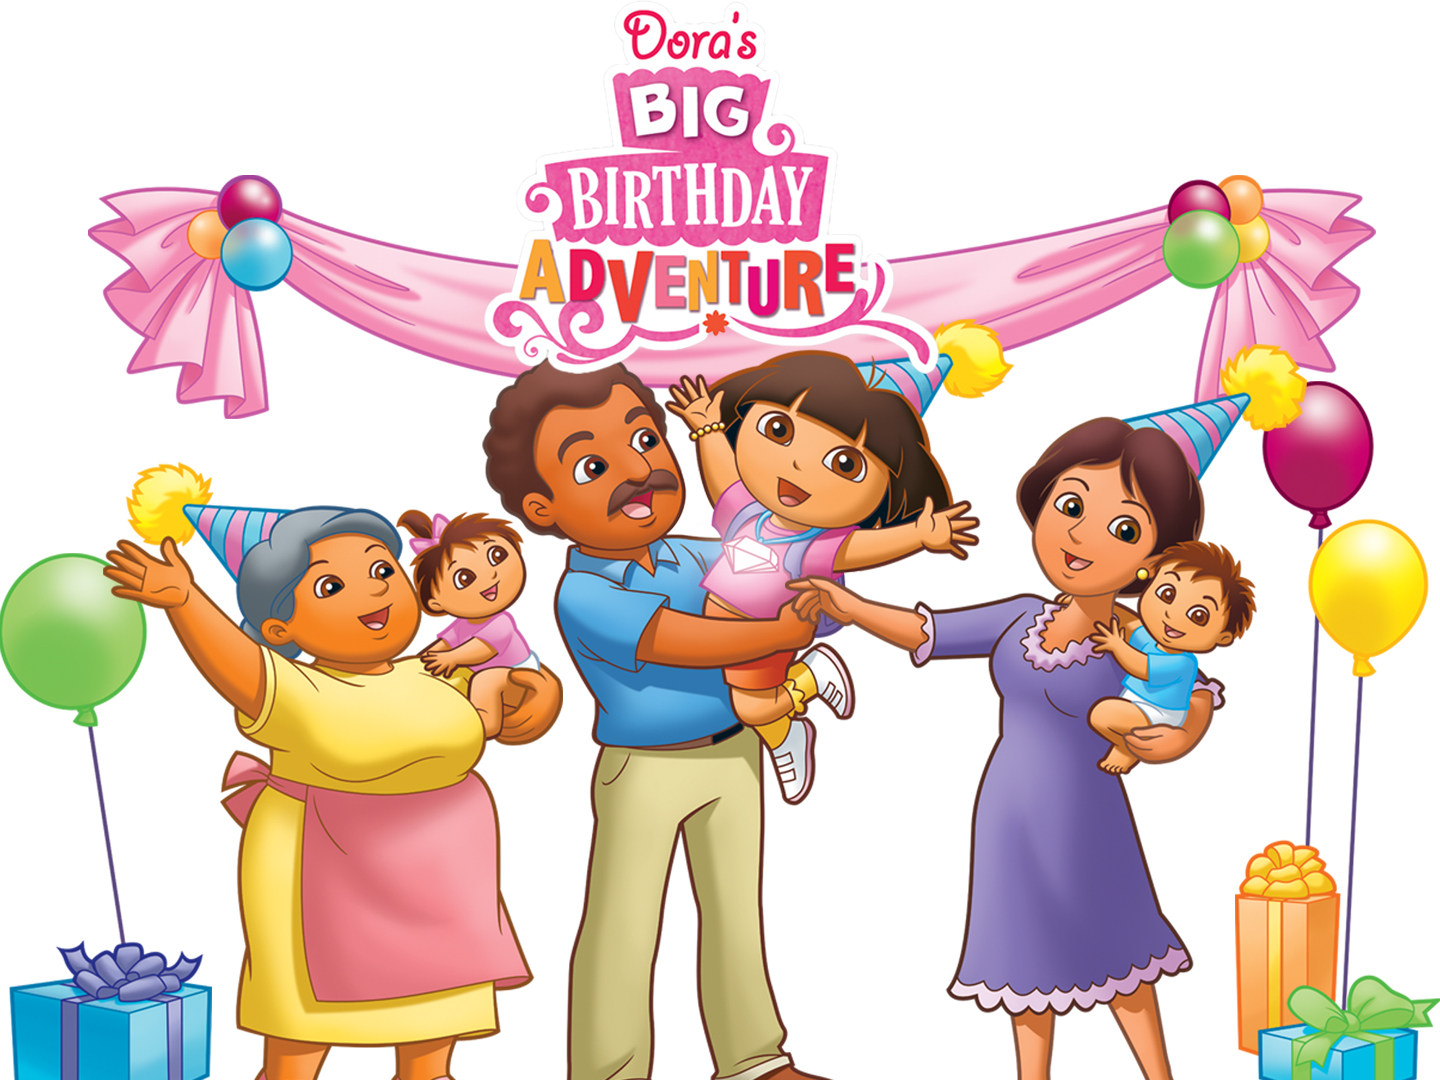 Watch Doras Big Birthday Adventure Online Season 1 On Lightbox.